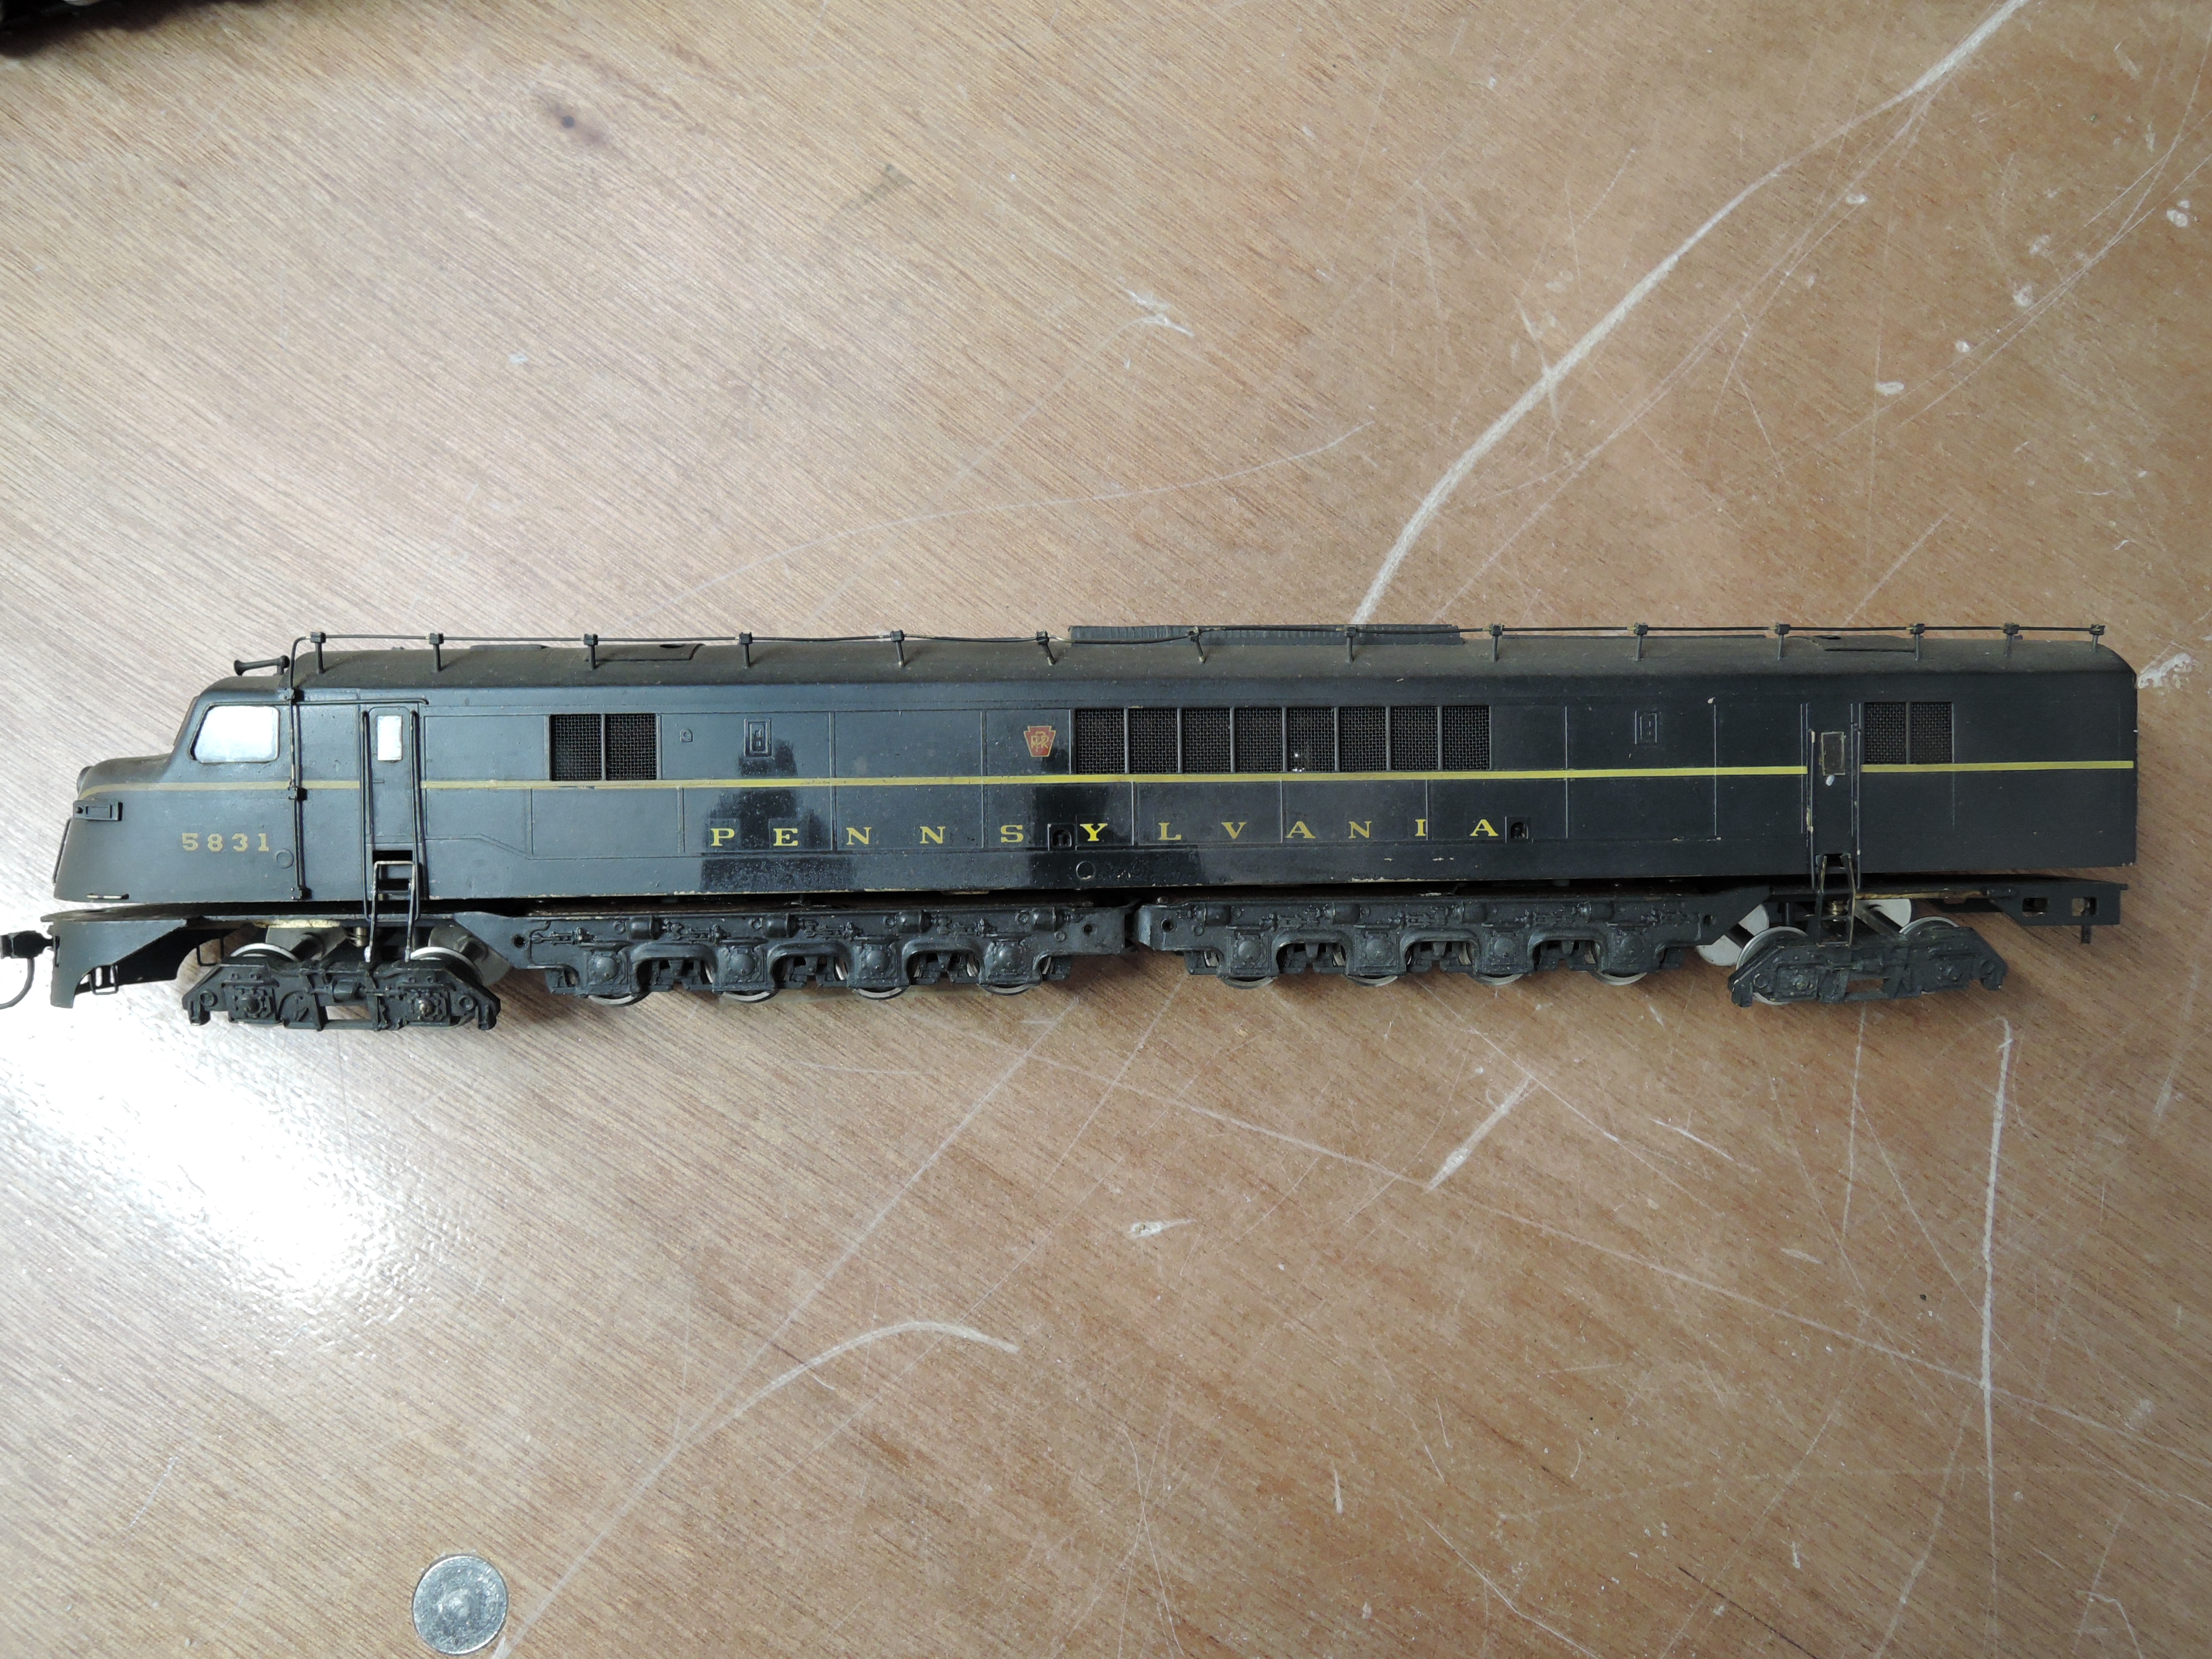 Two KMT & Hallmark Models American Brass HO scale Pennsylvania Locomotives both 5831 - Image 3 of 10